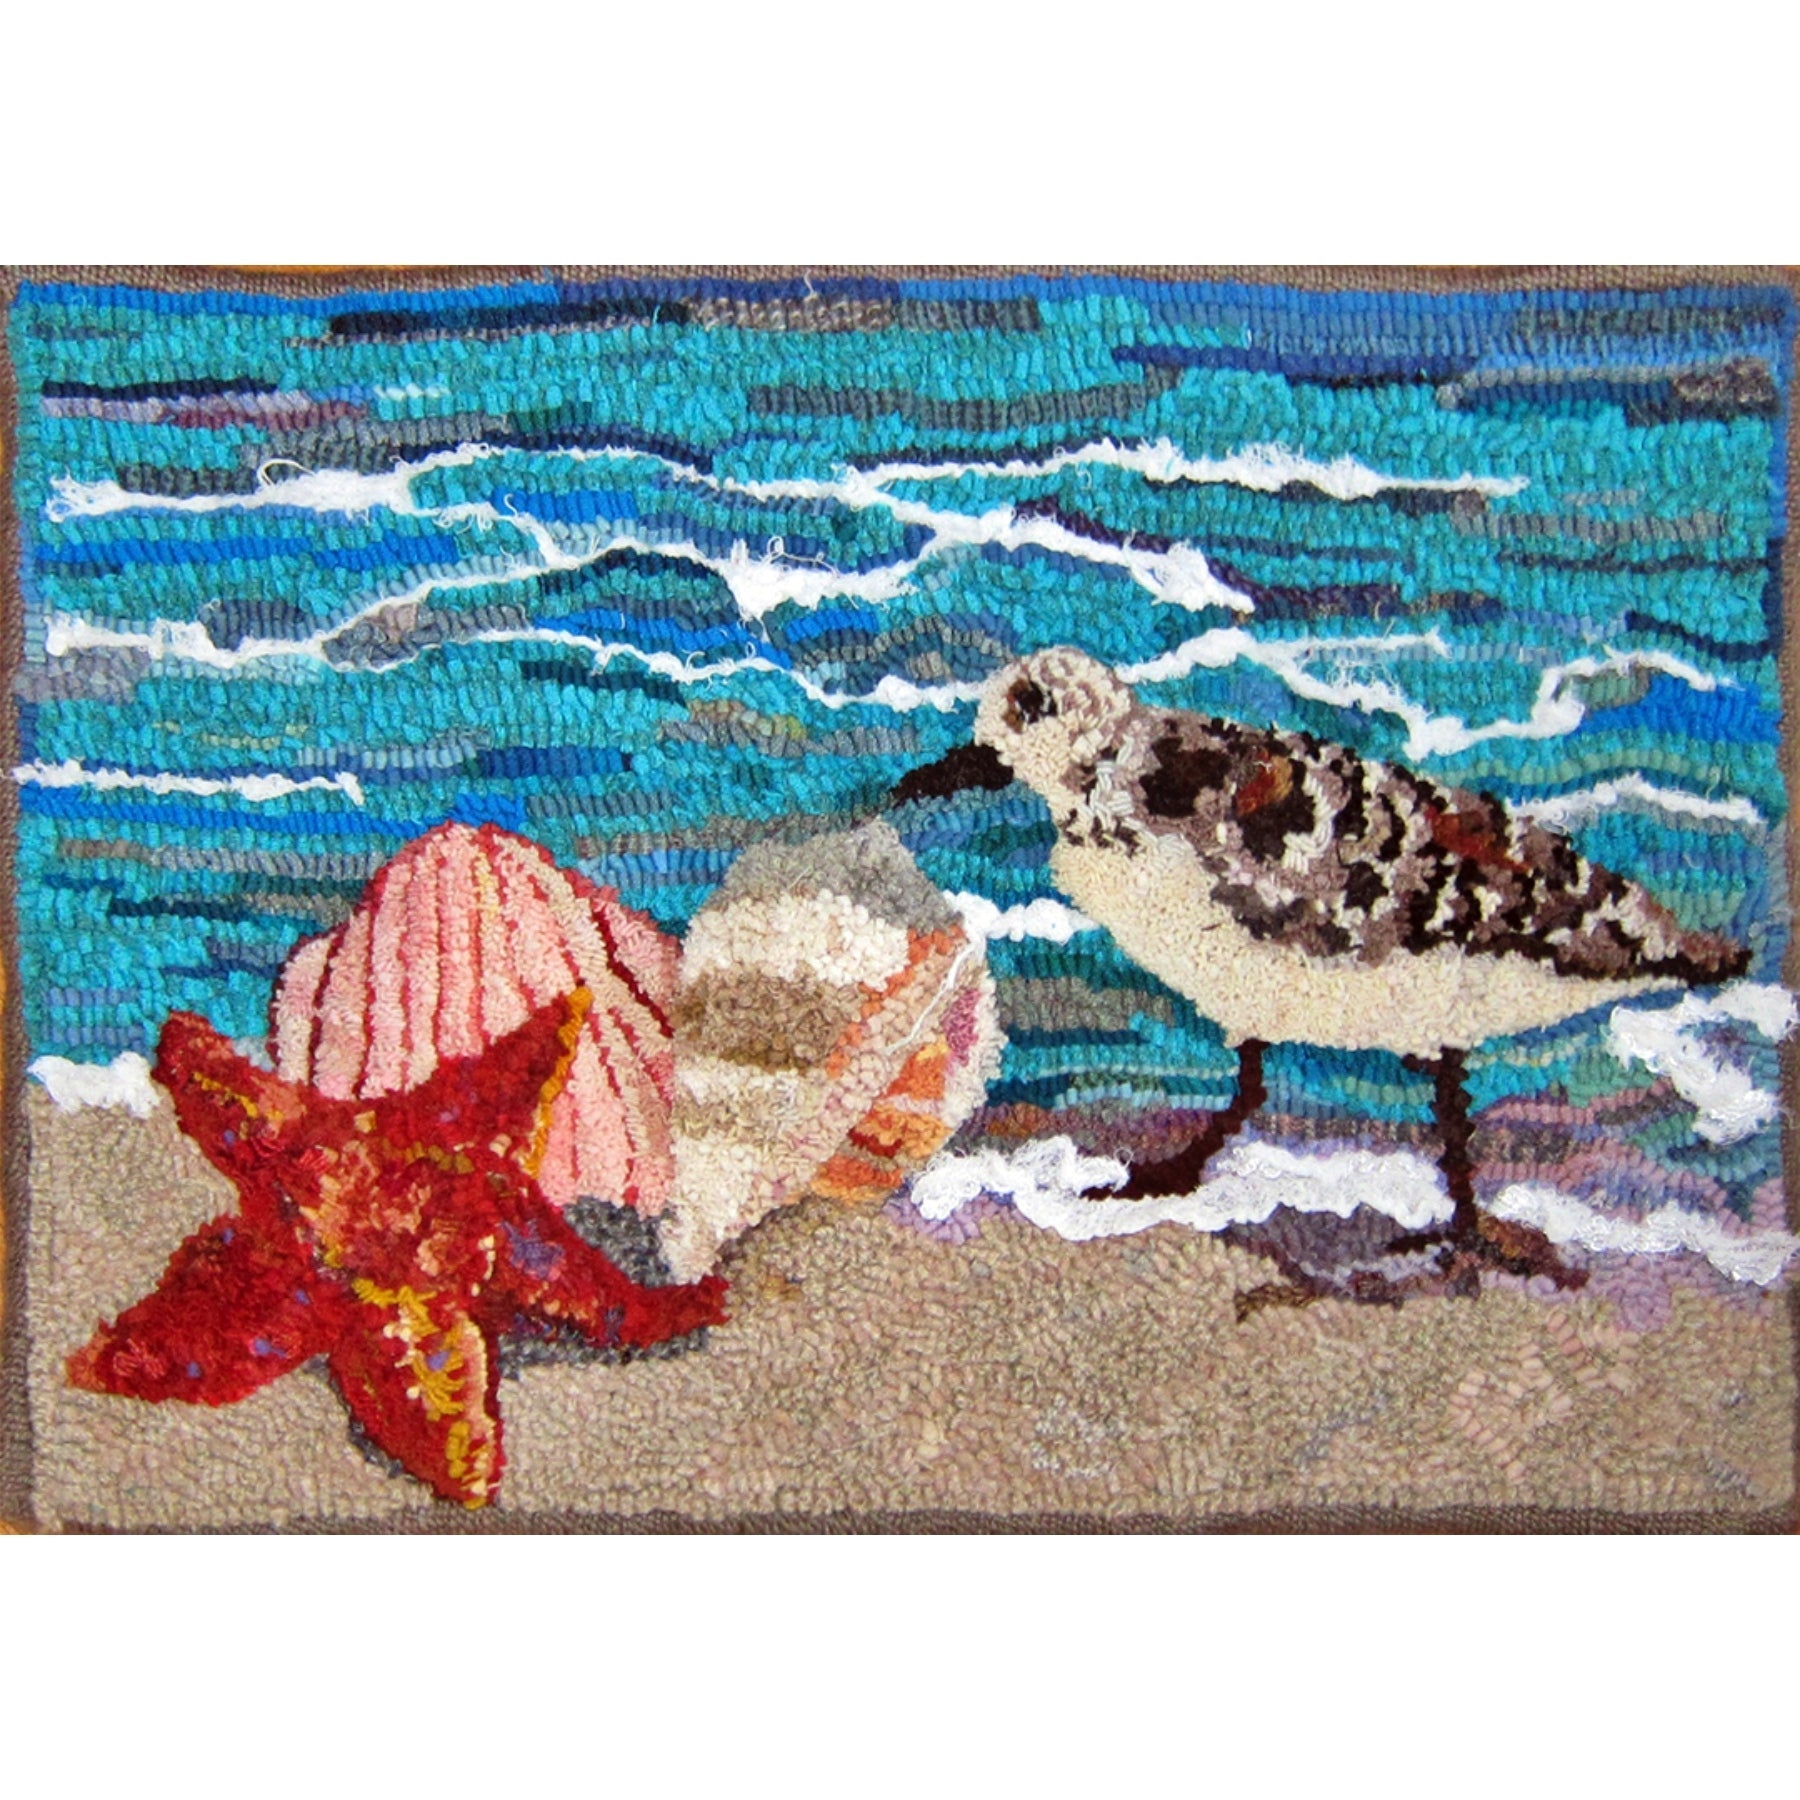 Seashore, rug hooked by Cheryl Bollenbach